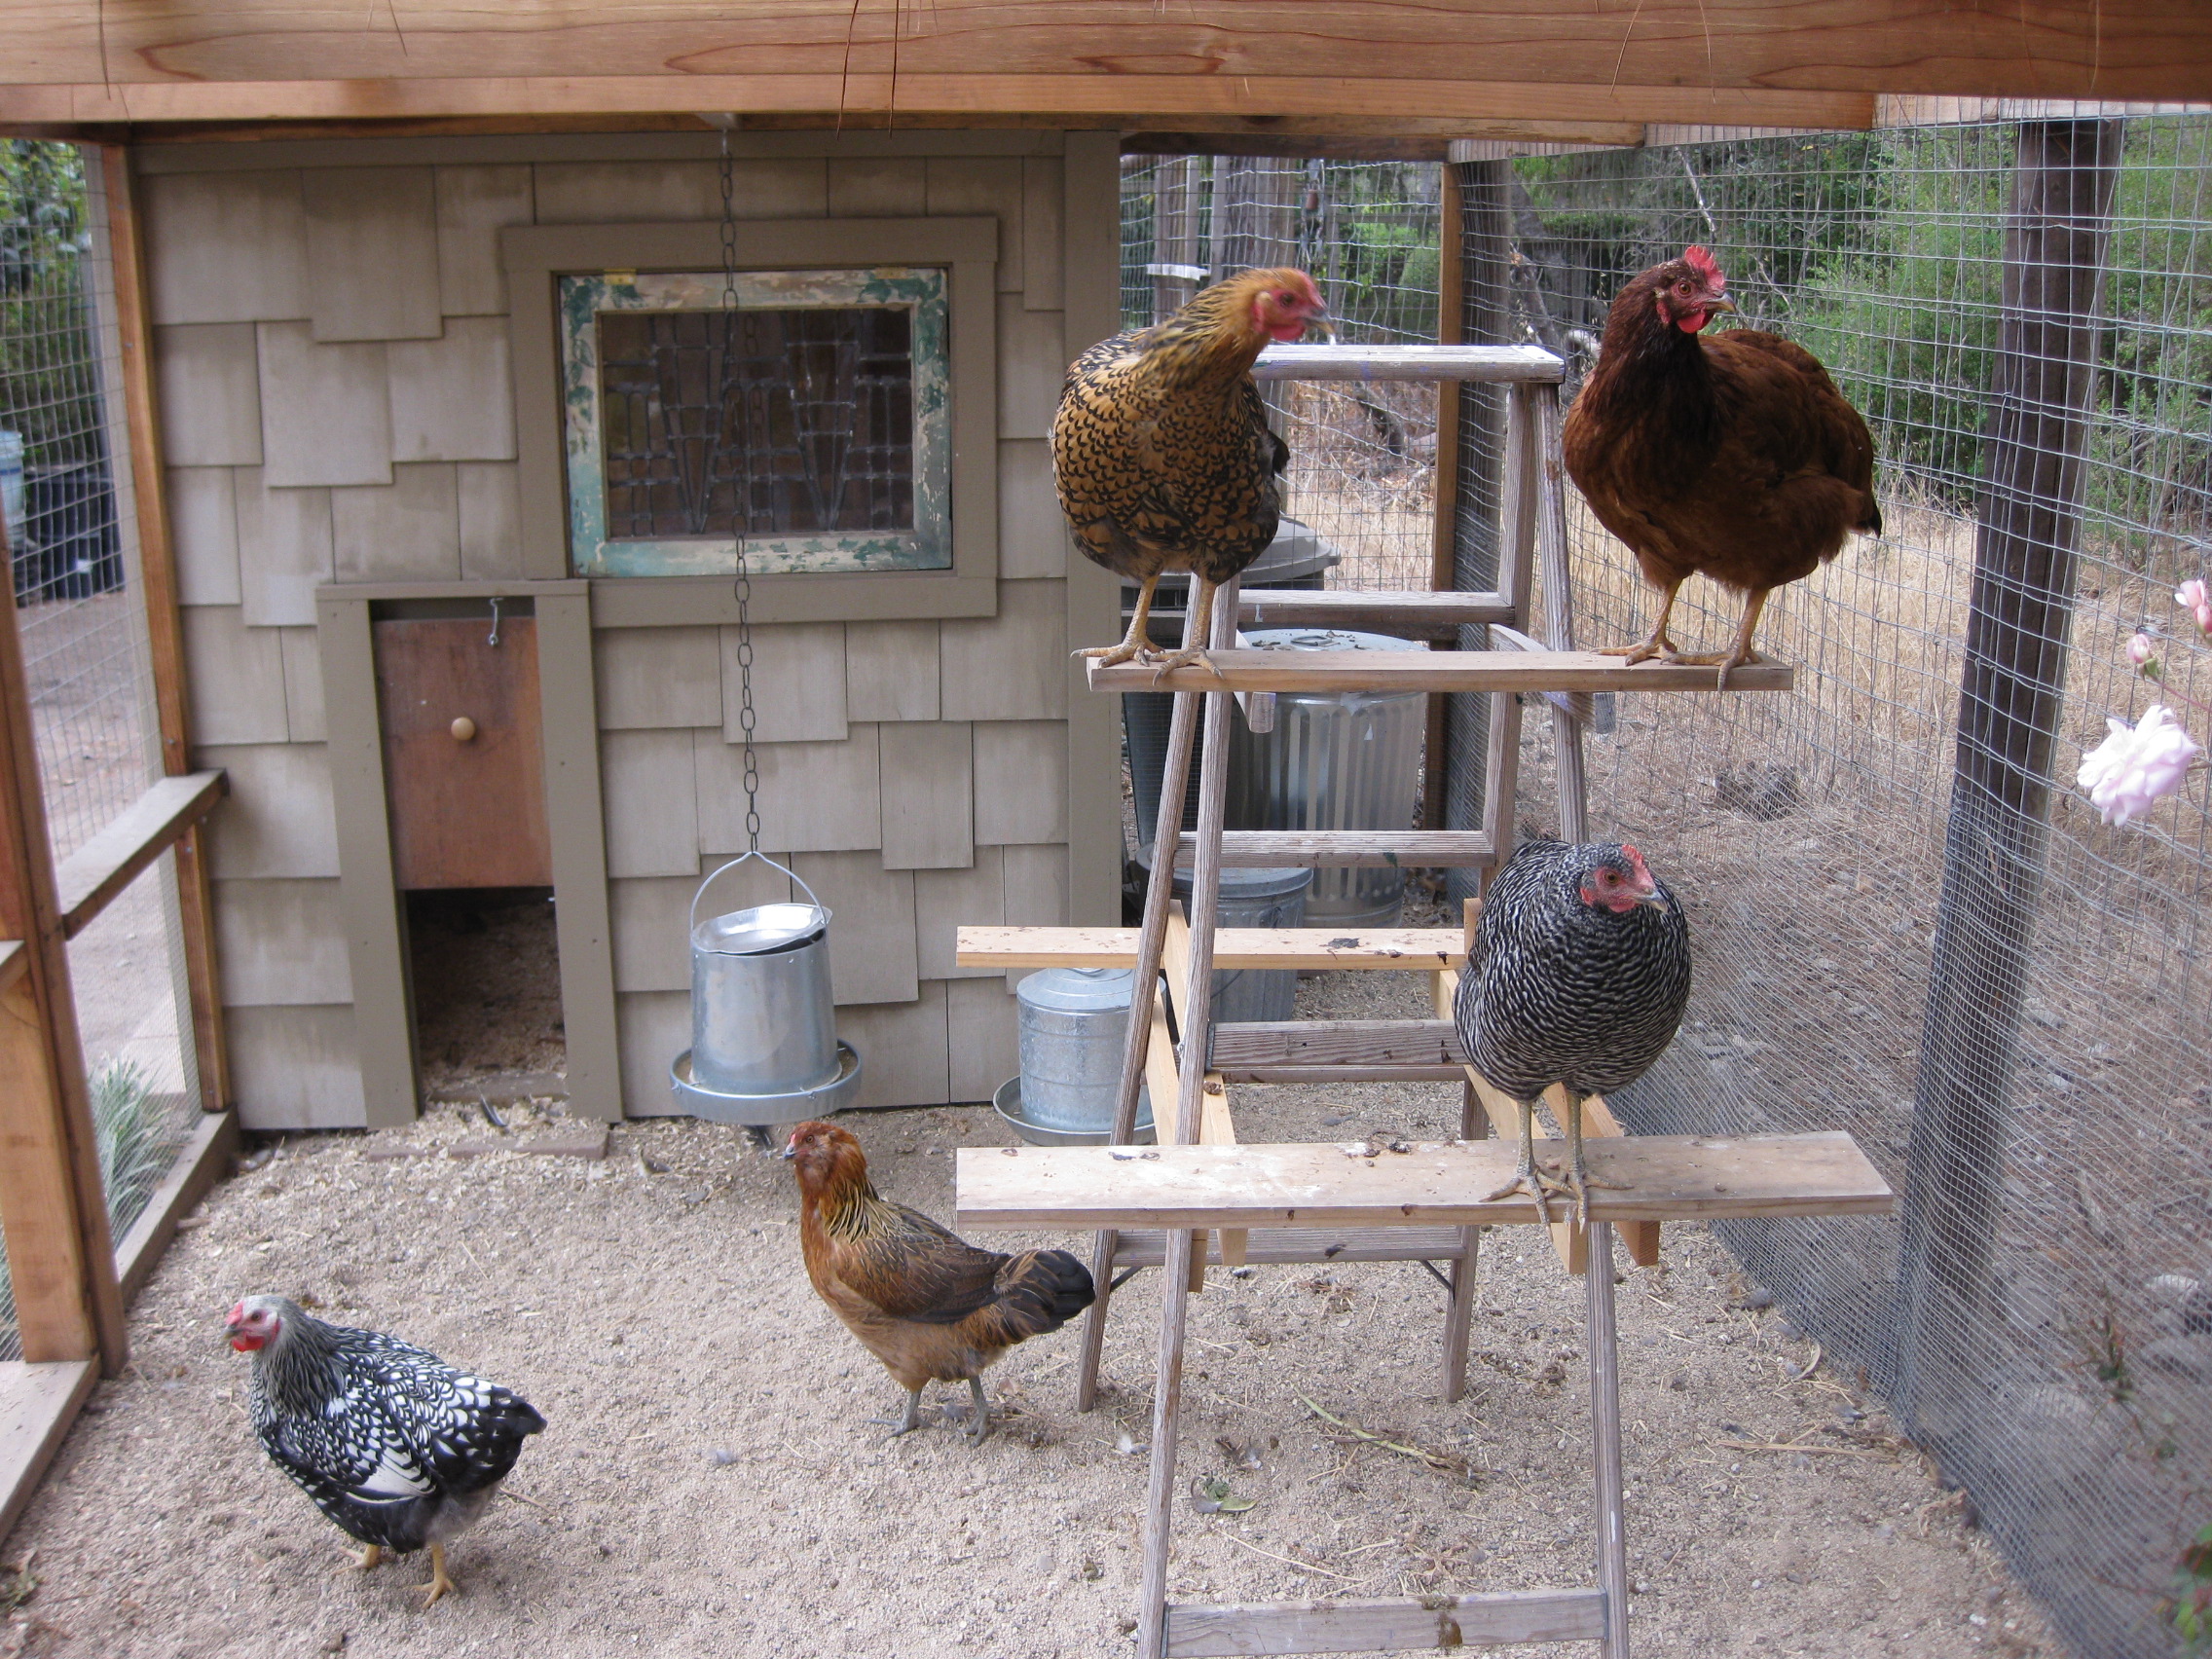 Floor Space for Chicken Coop and Runs - Raising Chickens - coop design 